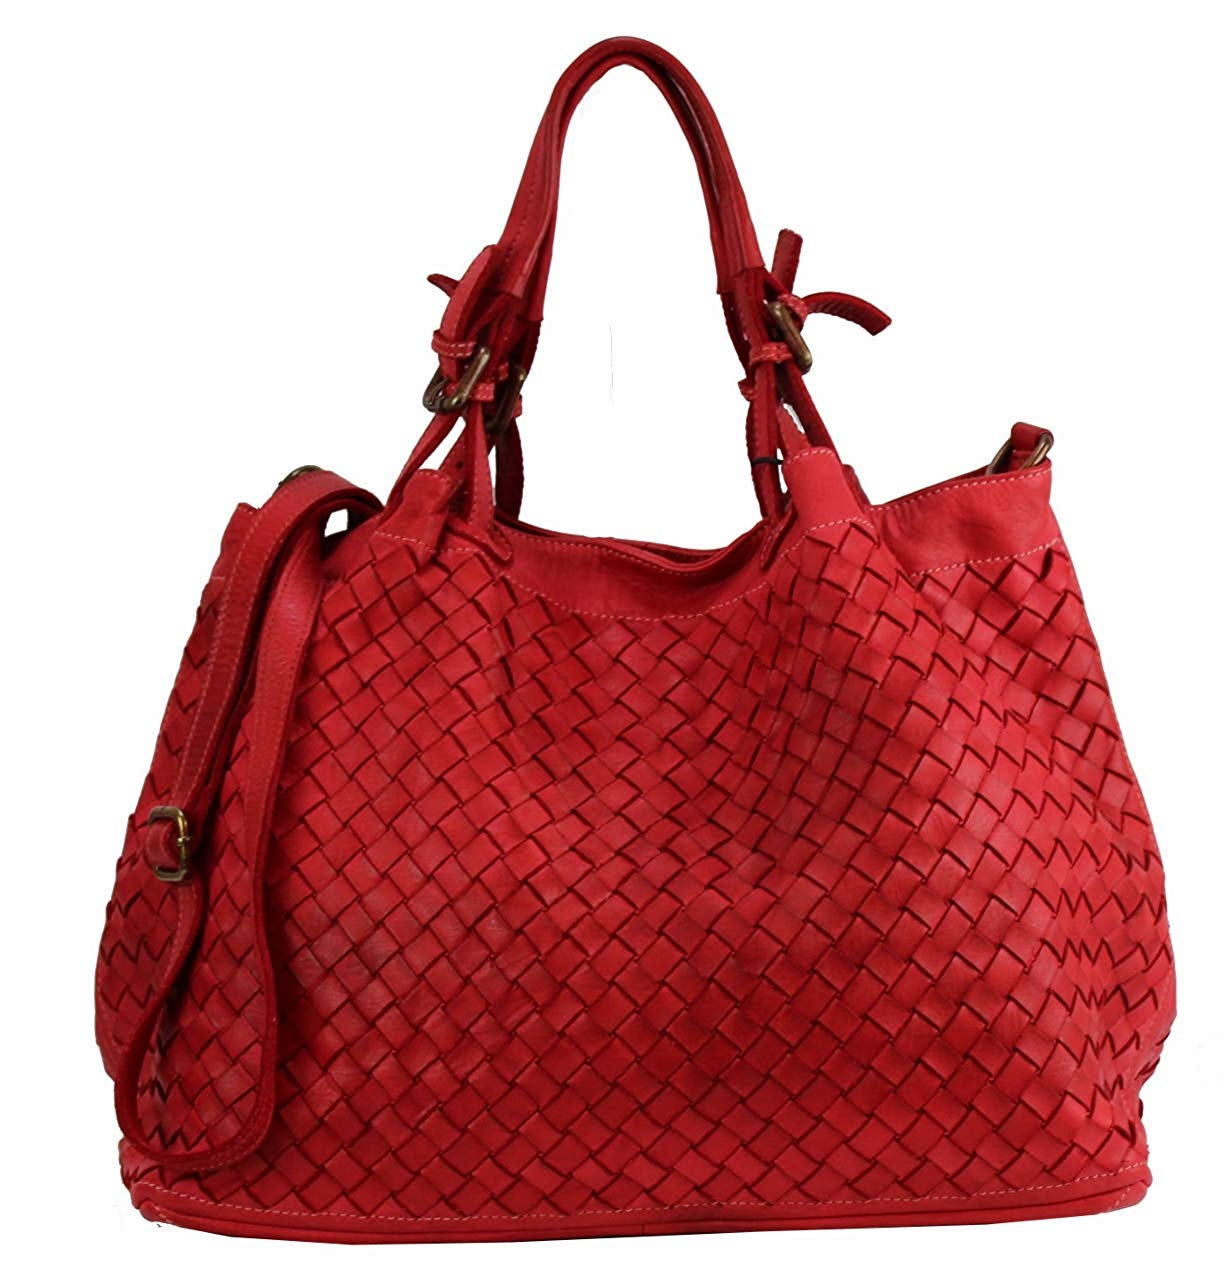 BZNA Rene Bag rosso Rot red Italy Designer geflochten Damen Handtasche Schultertasche Tasche Schafsleder Shopper Neu